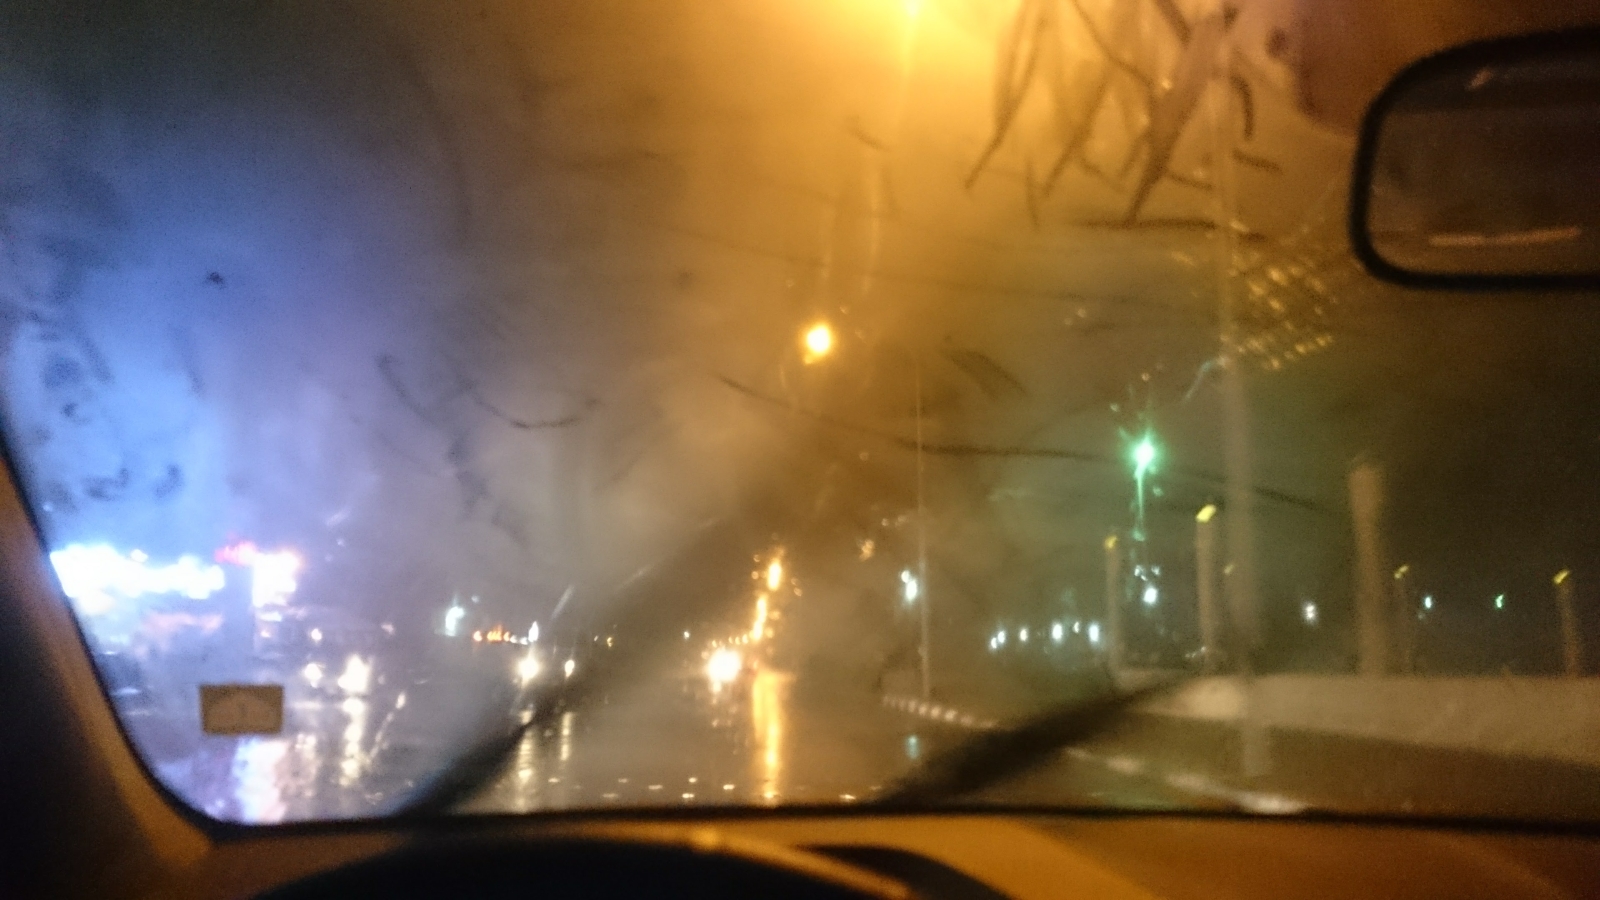 3 in 1 Anti Fog Spray 2 Windshield Defogger for Windows Cars Glasses